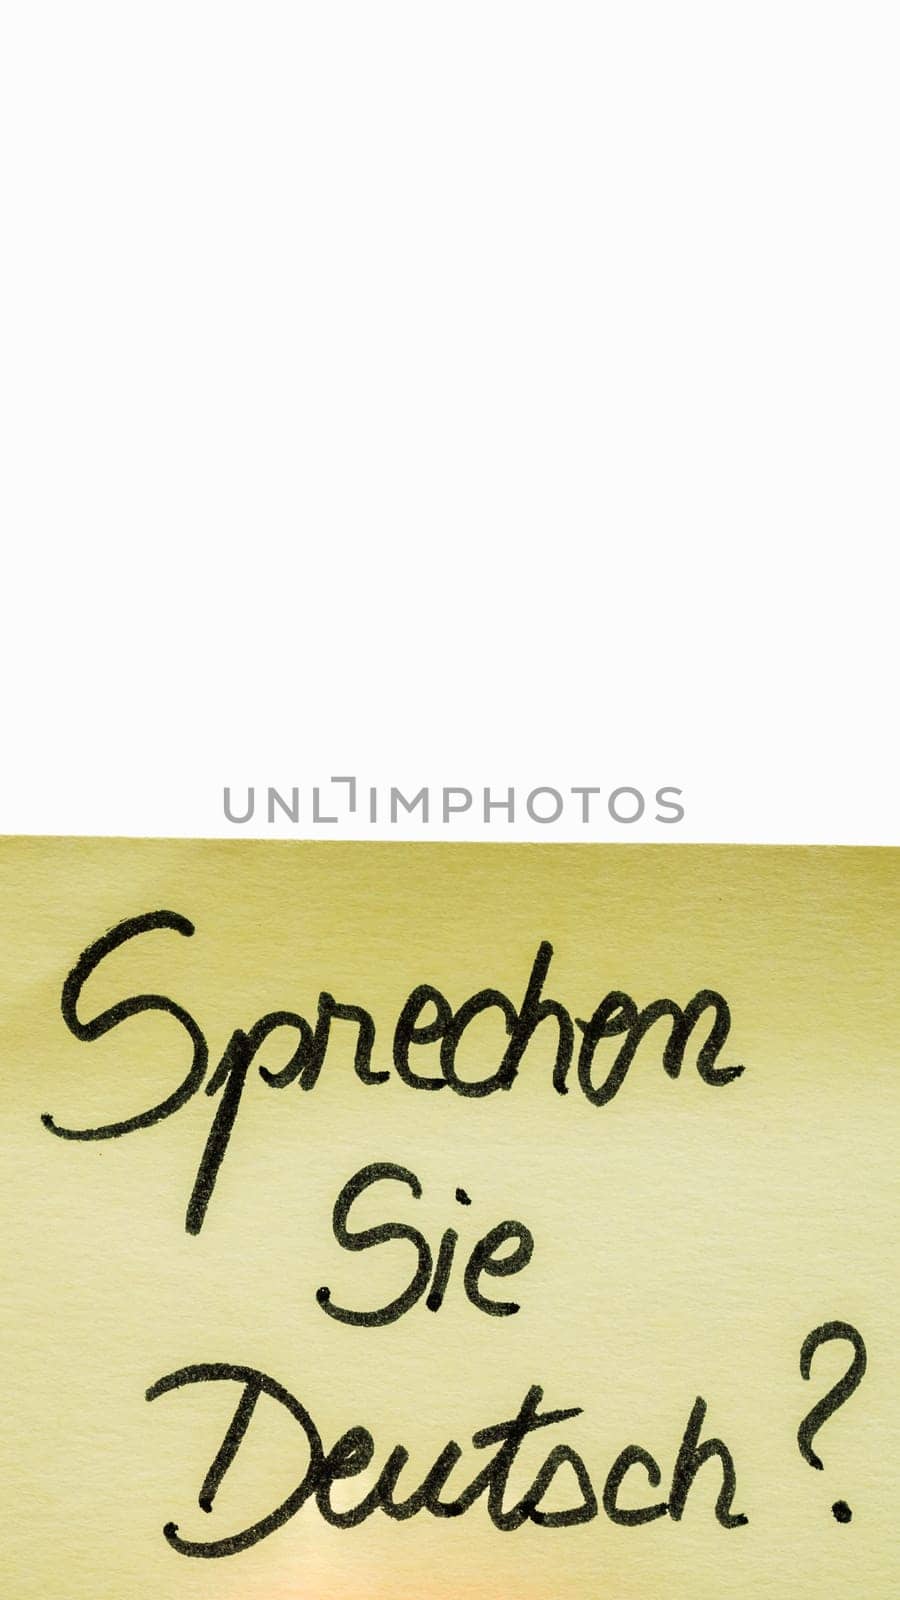 Sprechen sie deutsch ( do you speak german) handwriting text close up isolated on yellow paper with copy space. by vladispas